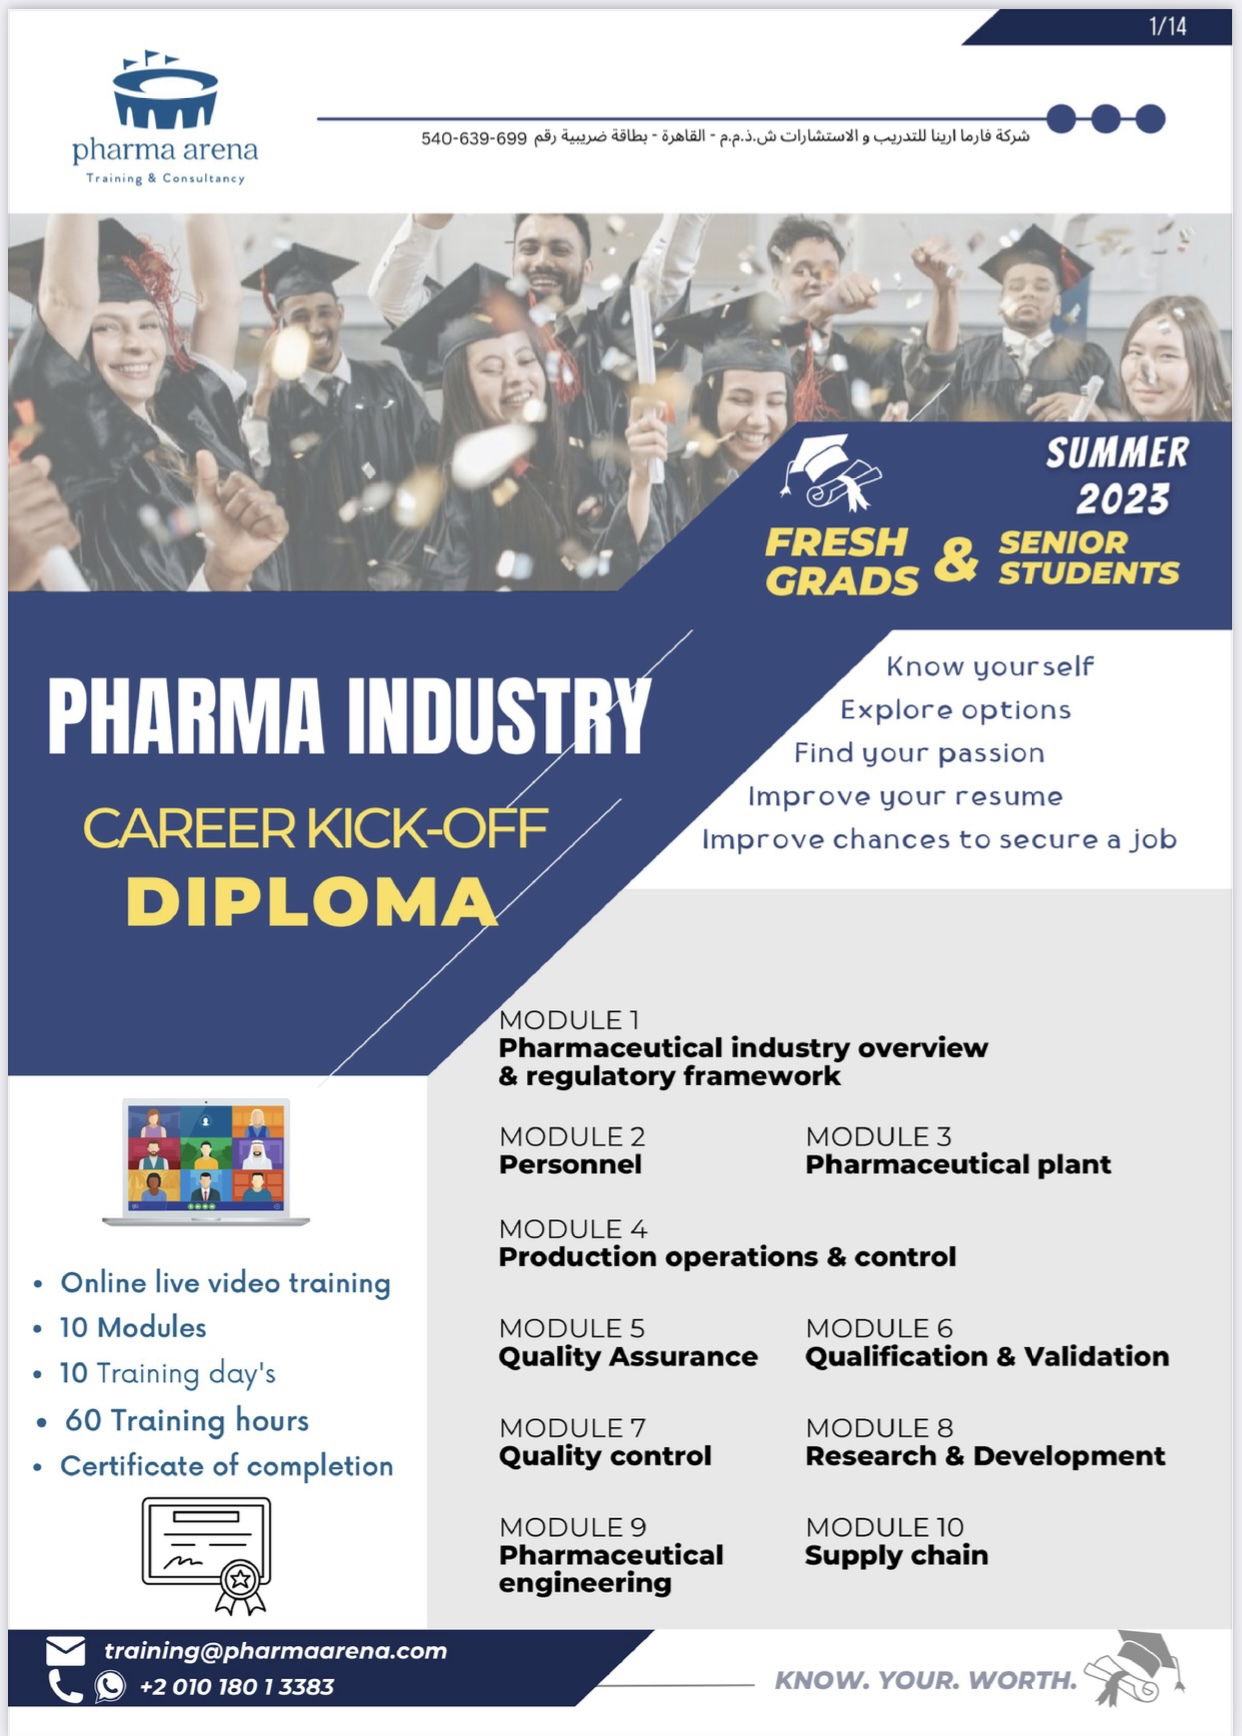 Pharma industry career kick-off diploma